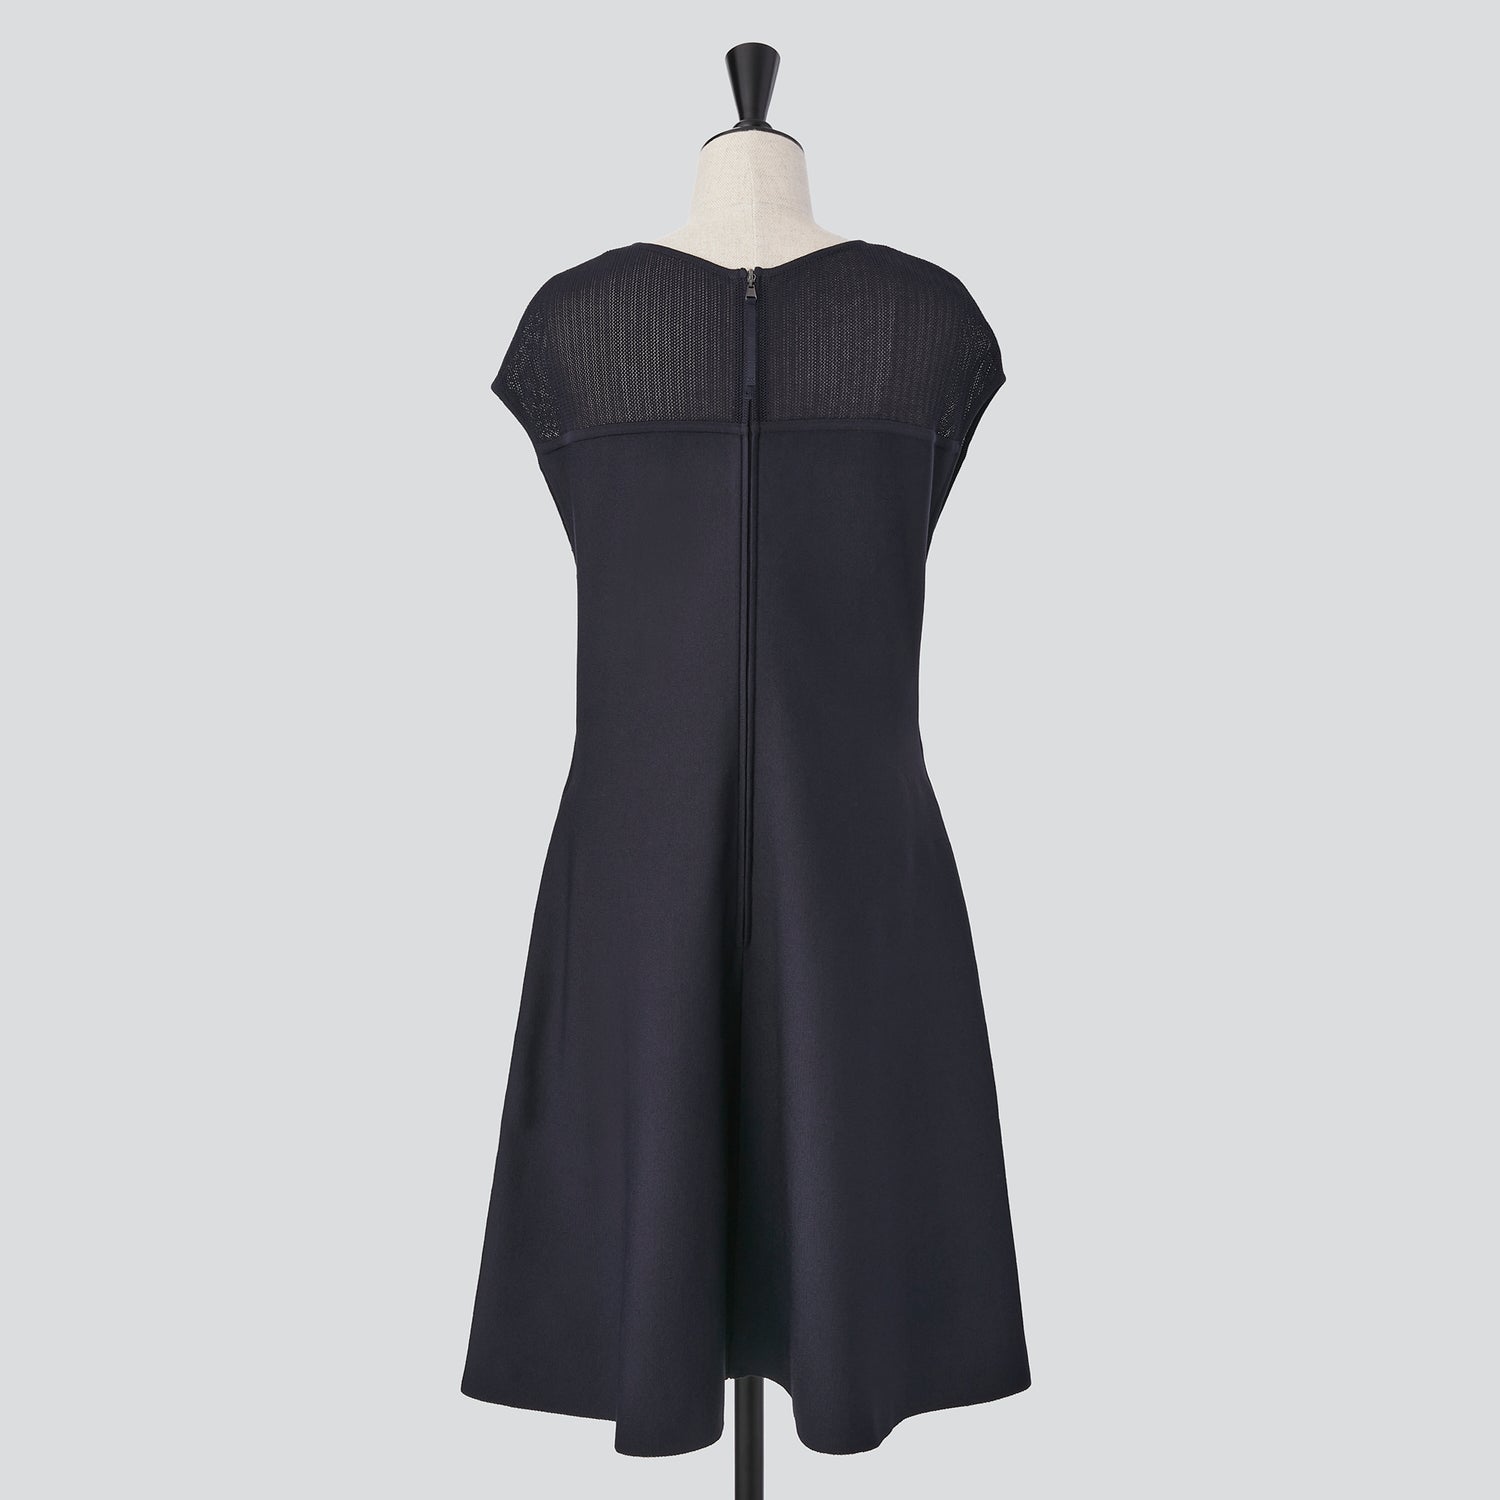 Knit Dress "Killian" – FOXEY 公式オンラインブティック